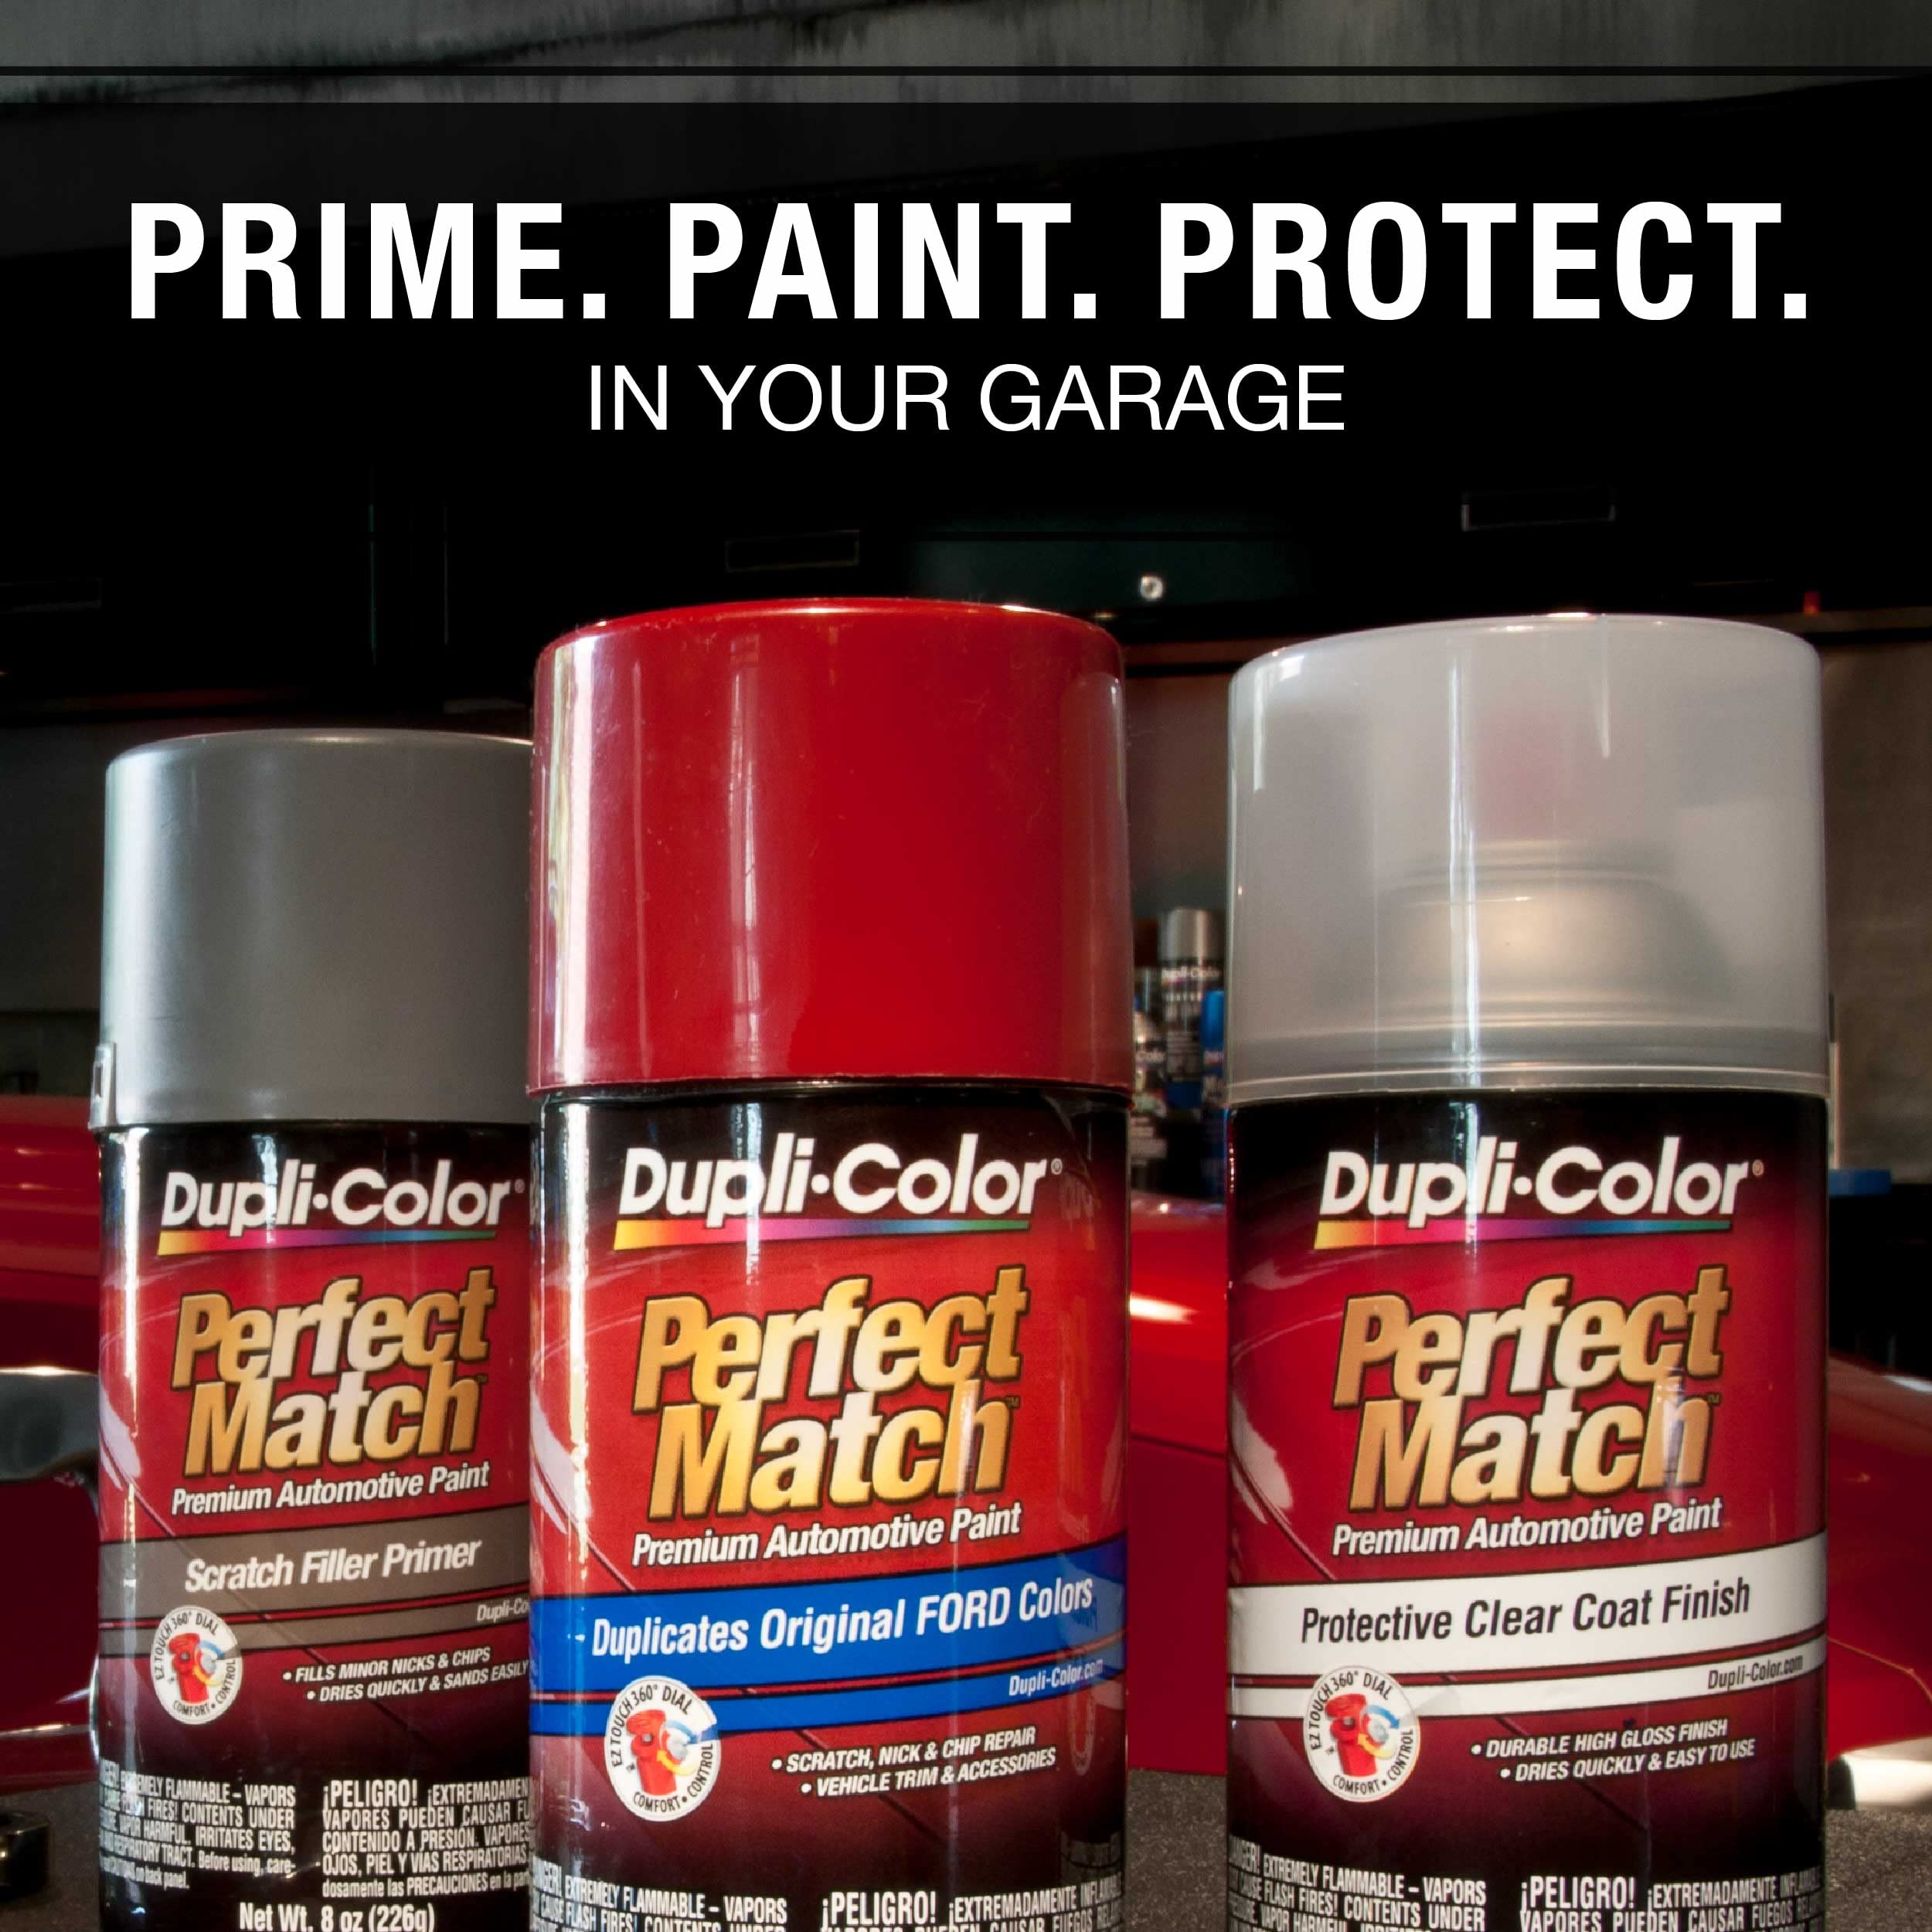 Dupli-color EBcc03867 Perfect Match Automotive Spray Paint - chrysler Teal Metallic, PP5LP5 - 8 oz Aerosol can